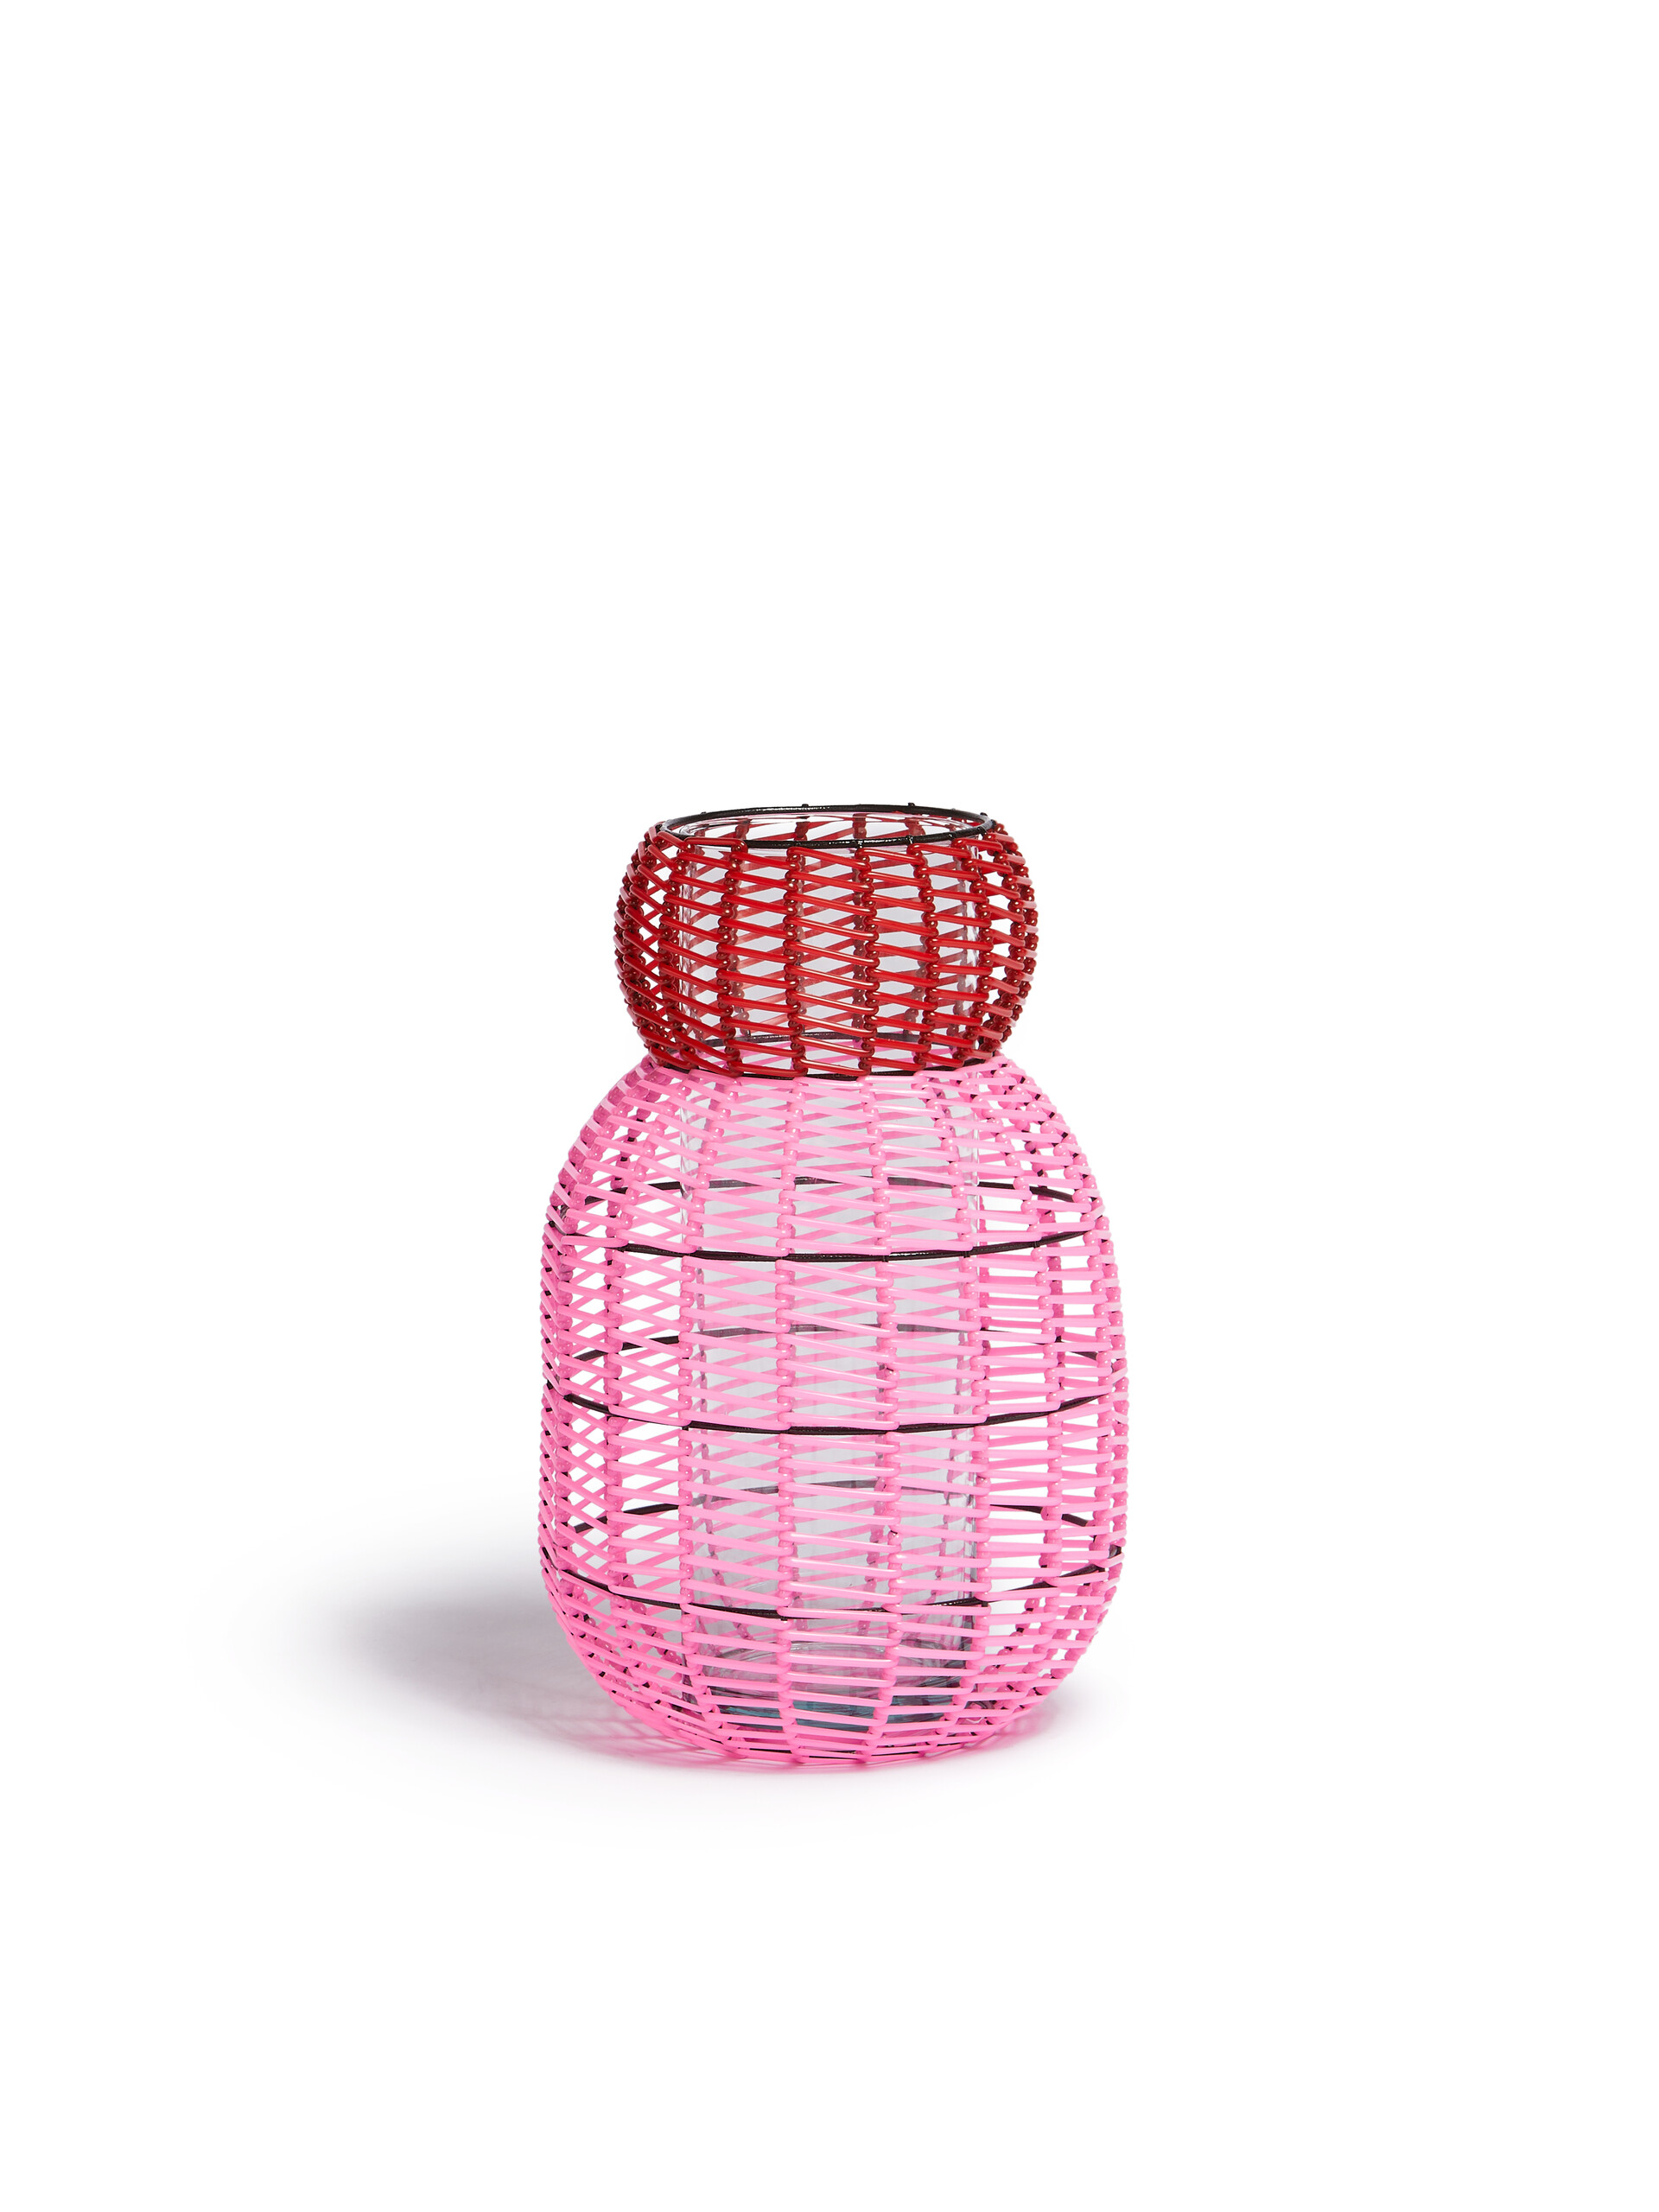 Pink MARNI MARKET woven cable vase - Furniture - Image 2